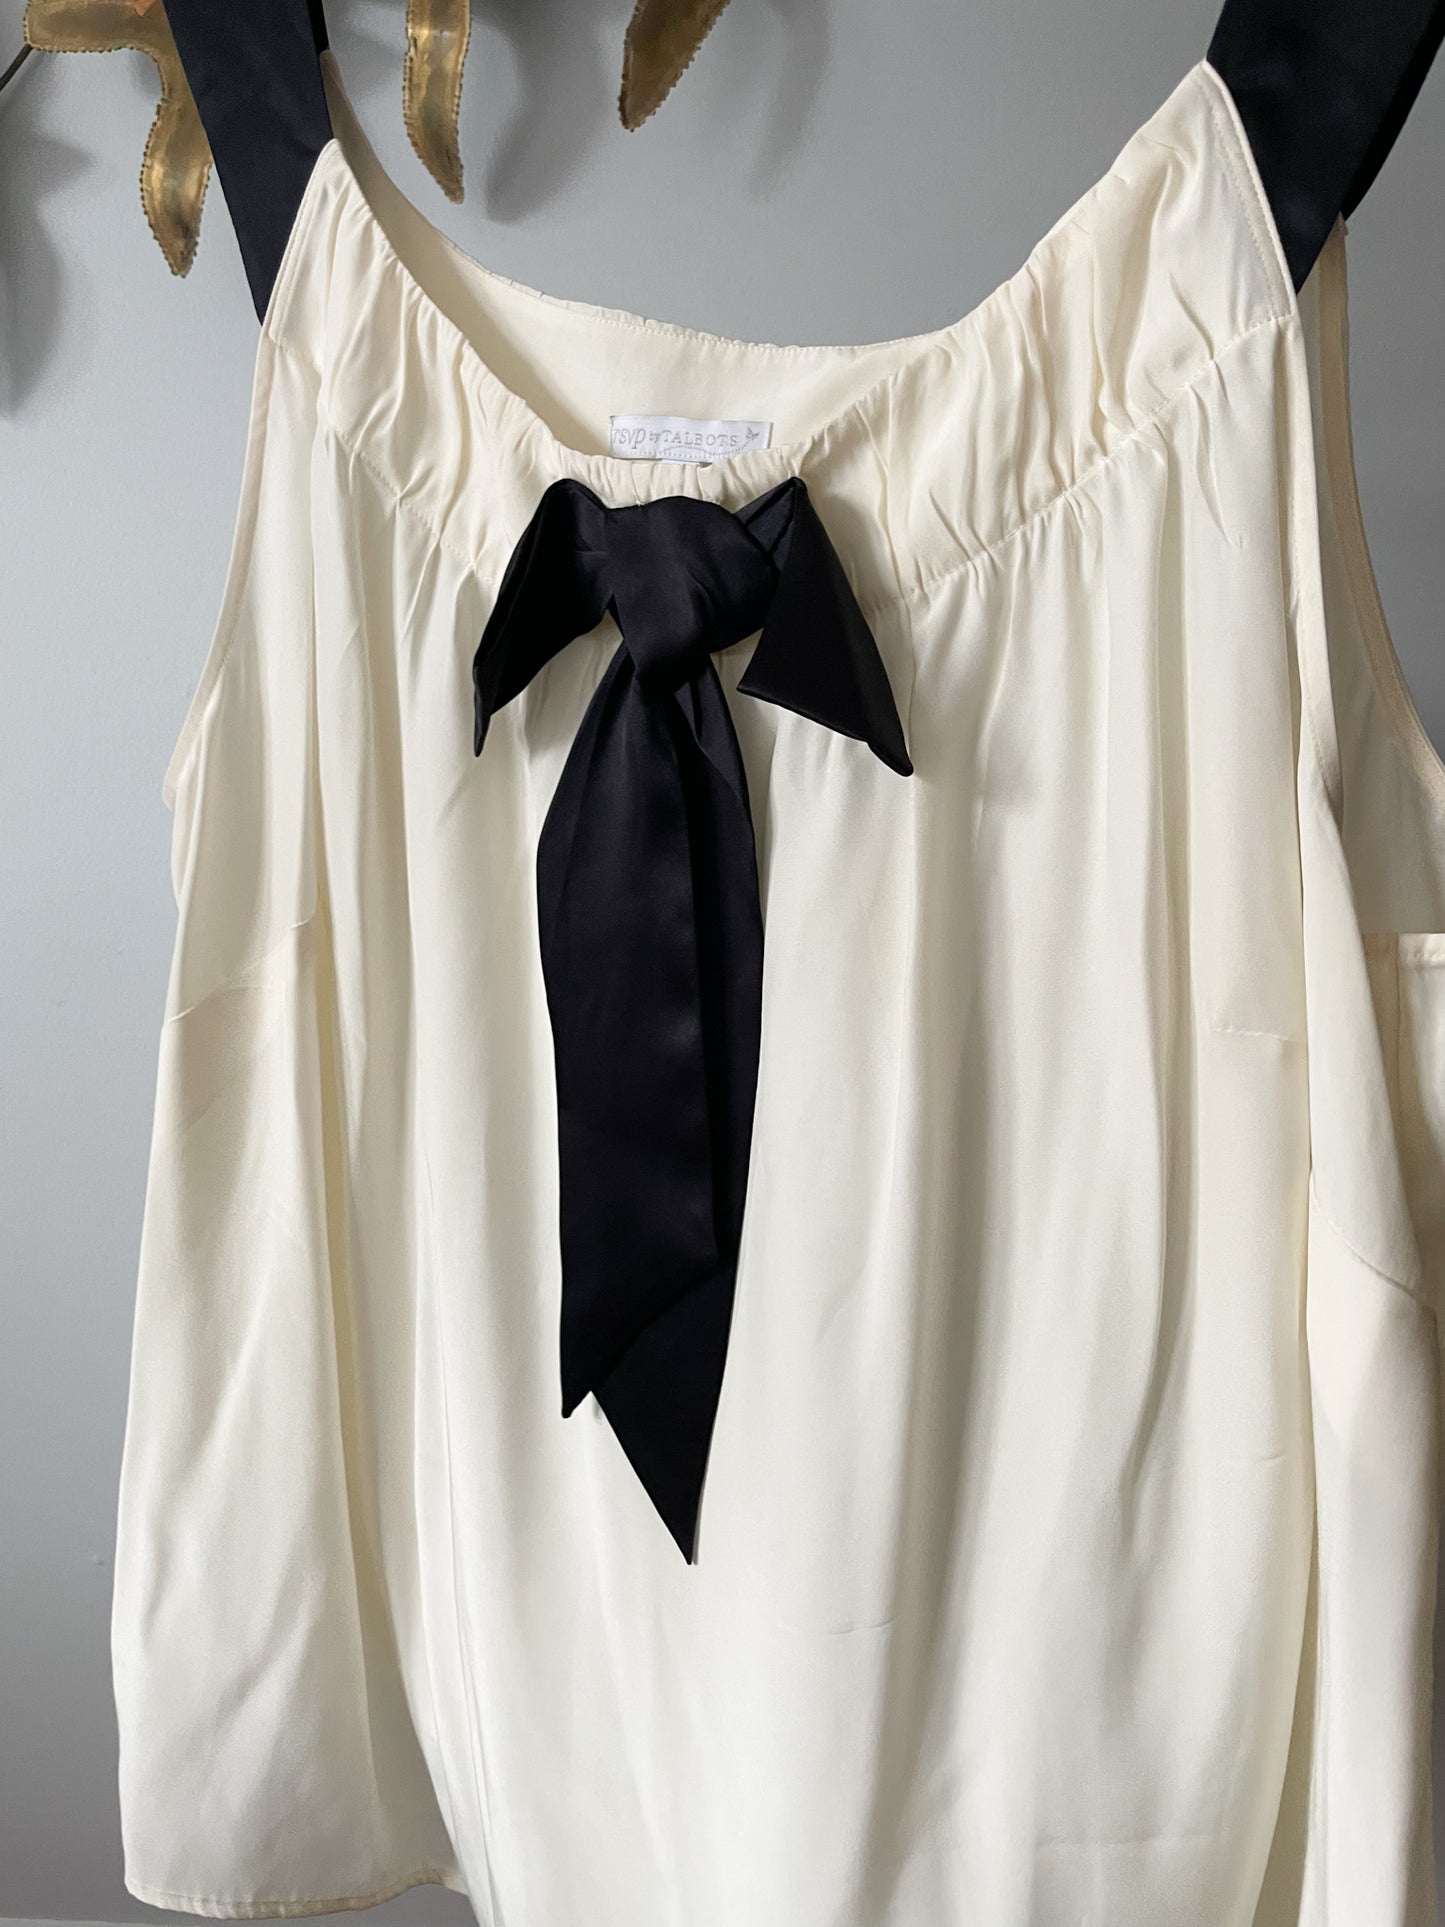 RSVP by Talbots Black White 100% Silk Bow Sleeveless Top - 3X